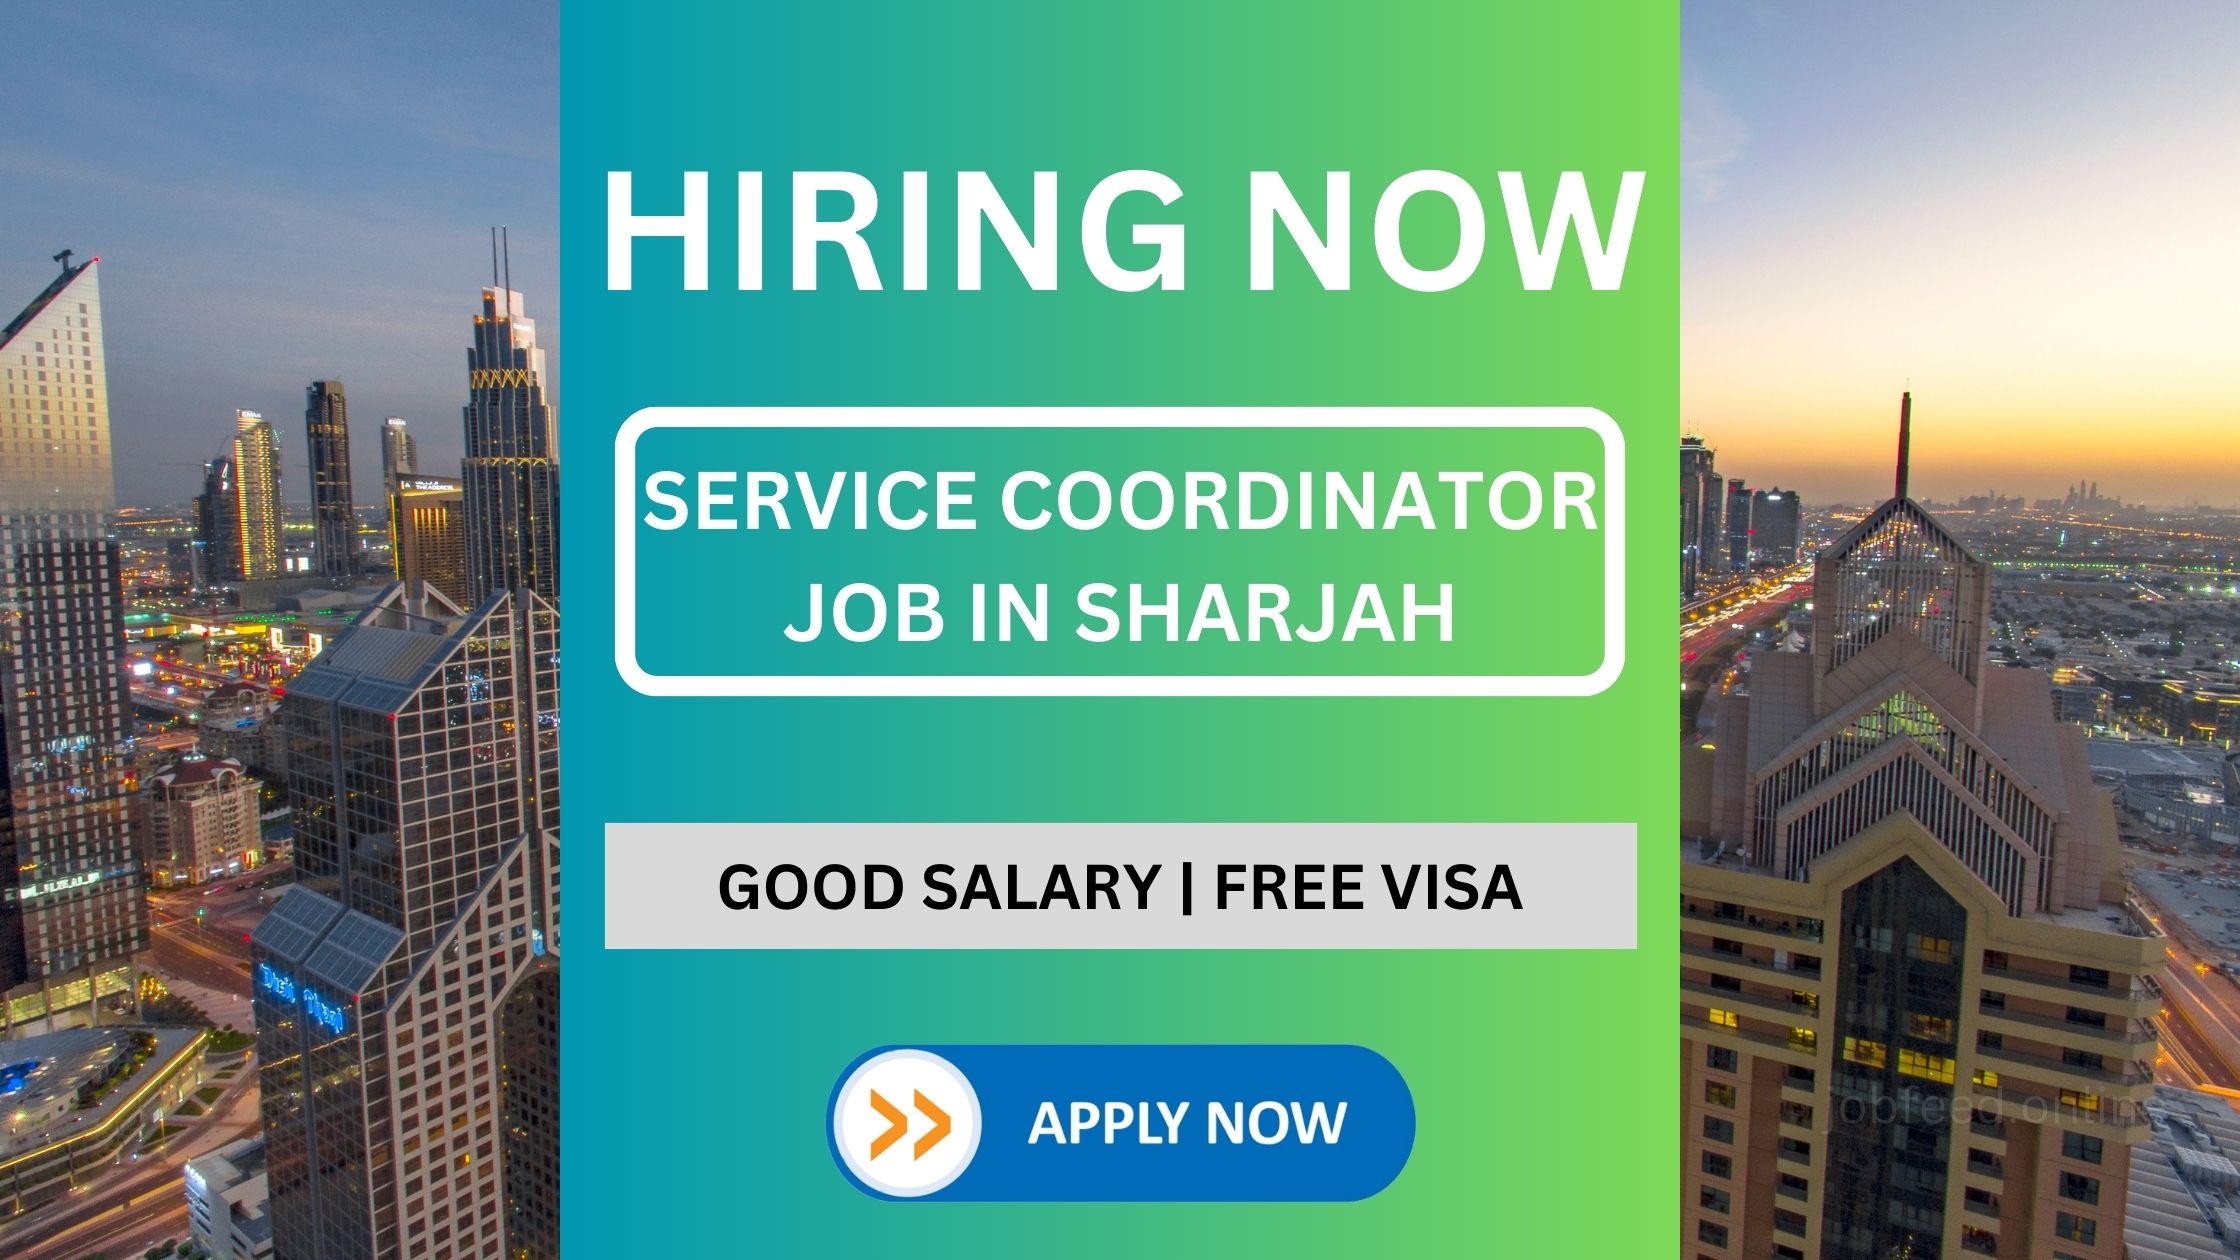 Service Coordinator job in Sharjah